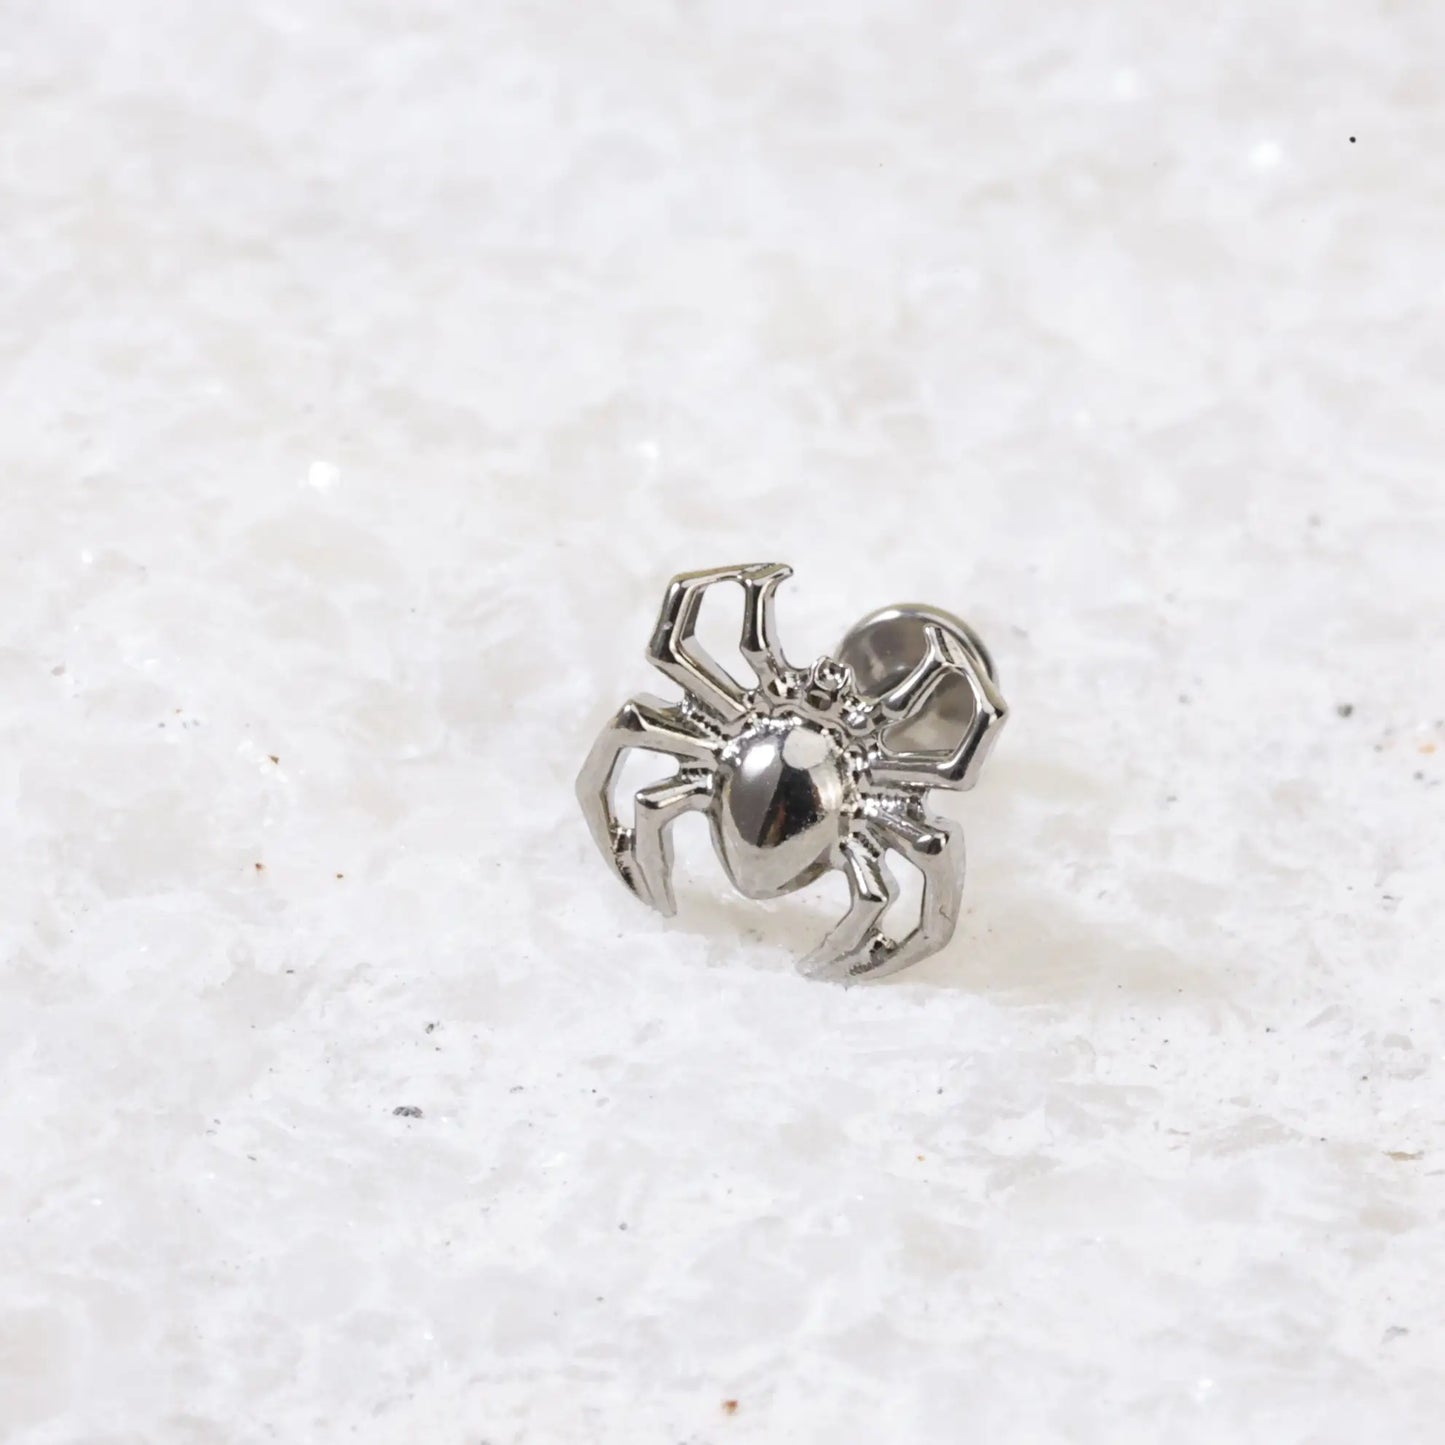 Titanium Statement Spider Piercing Earring